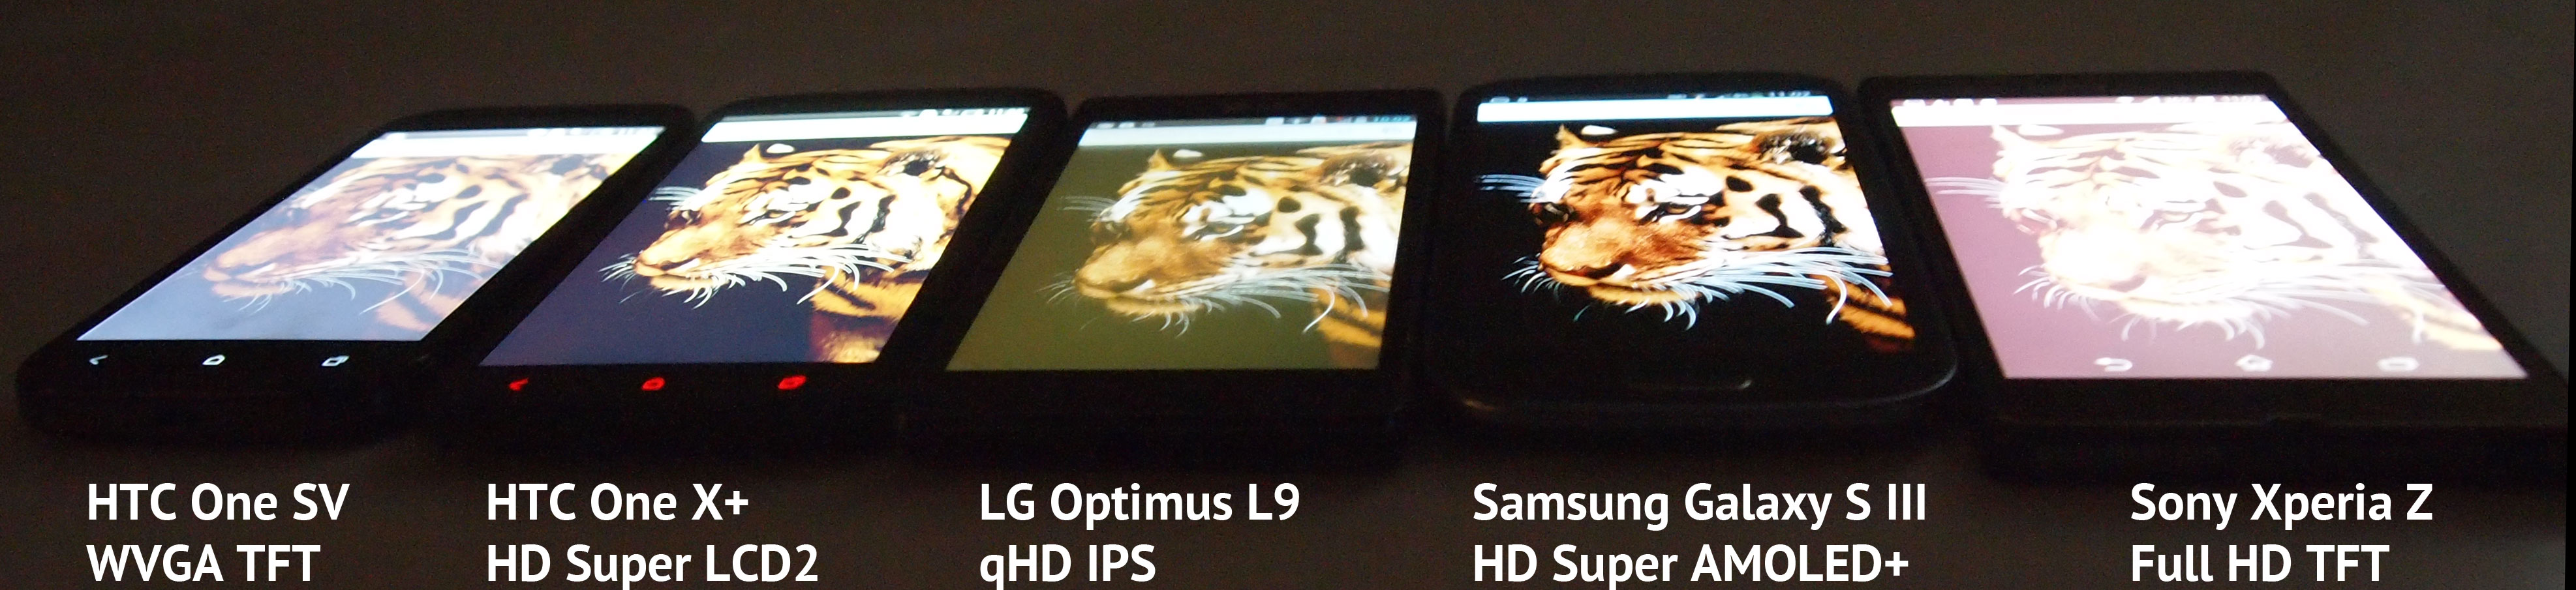 Sony-Xperia-Z-screen-comparison-more-camera-samples-emerge-1